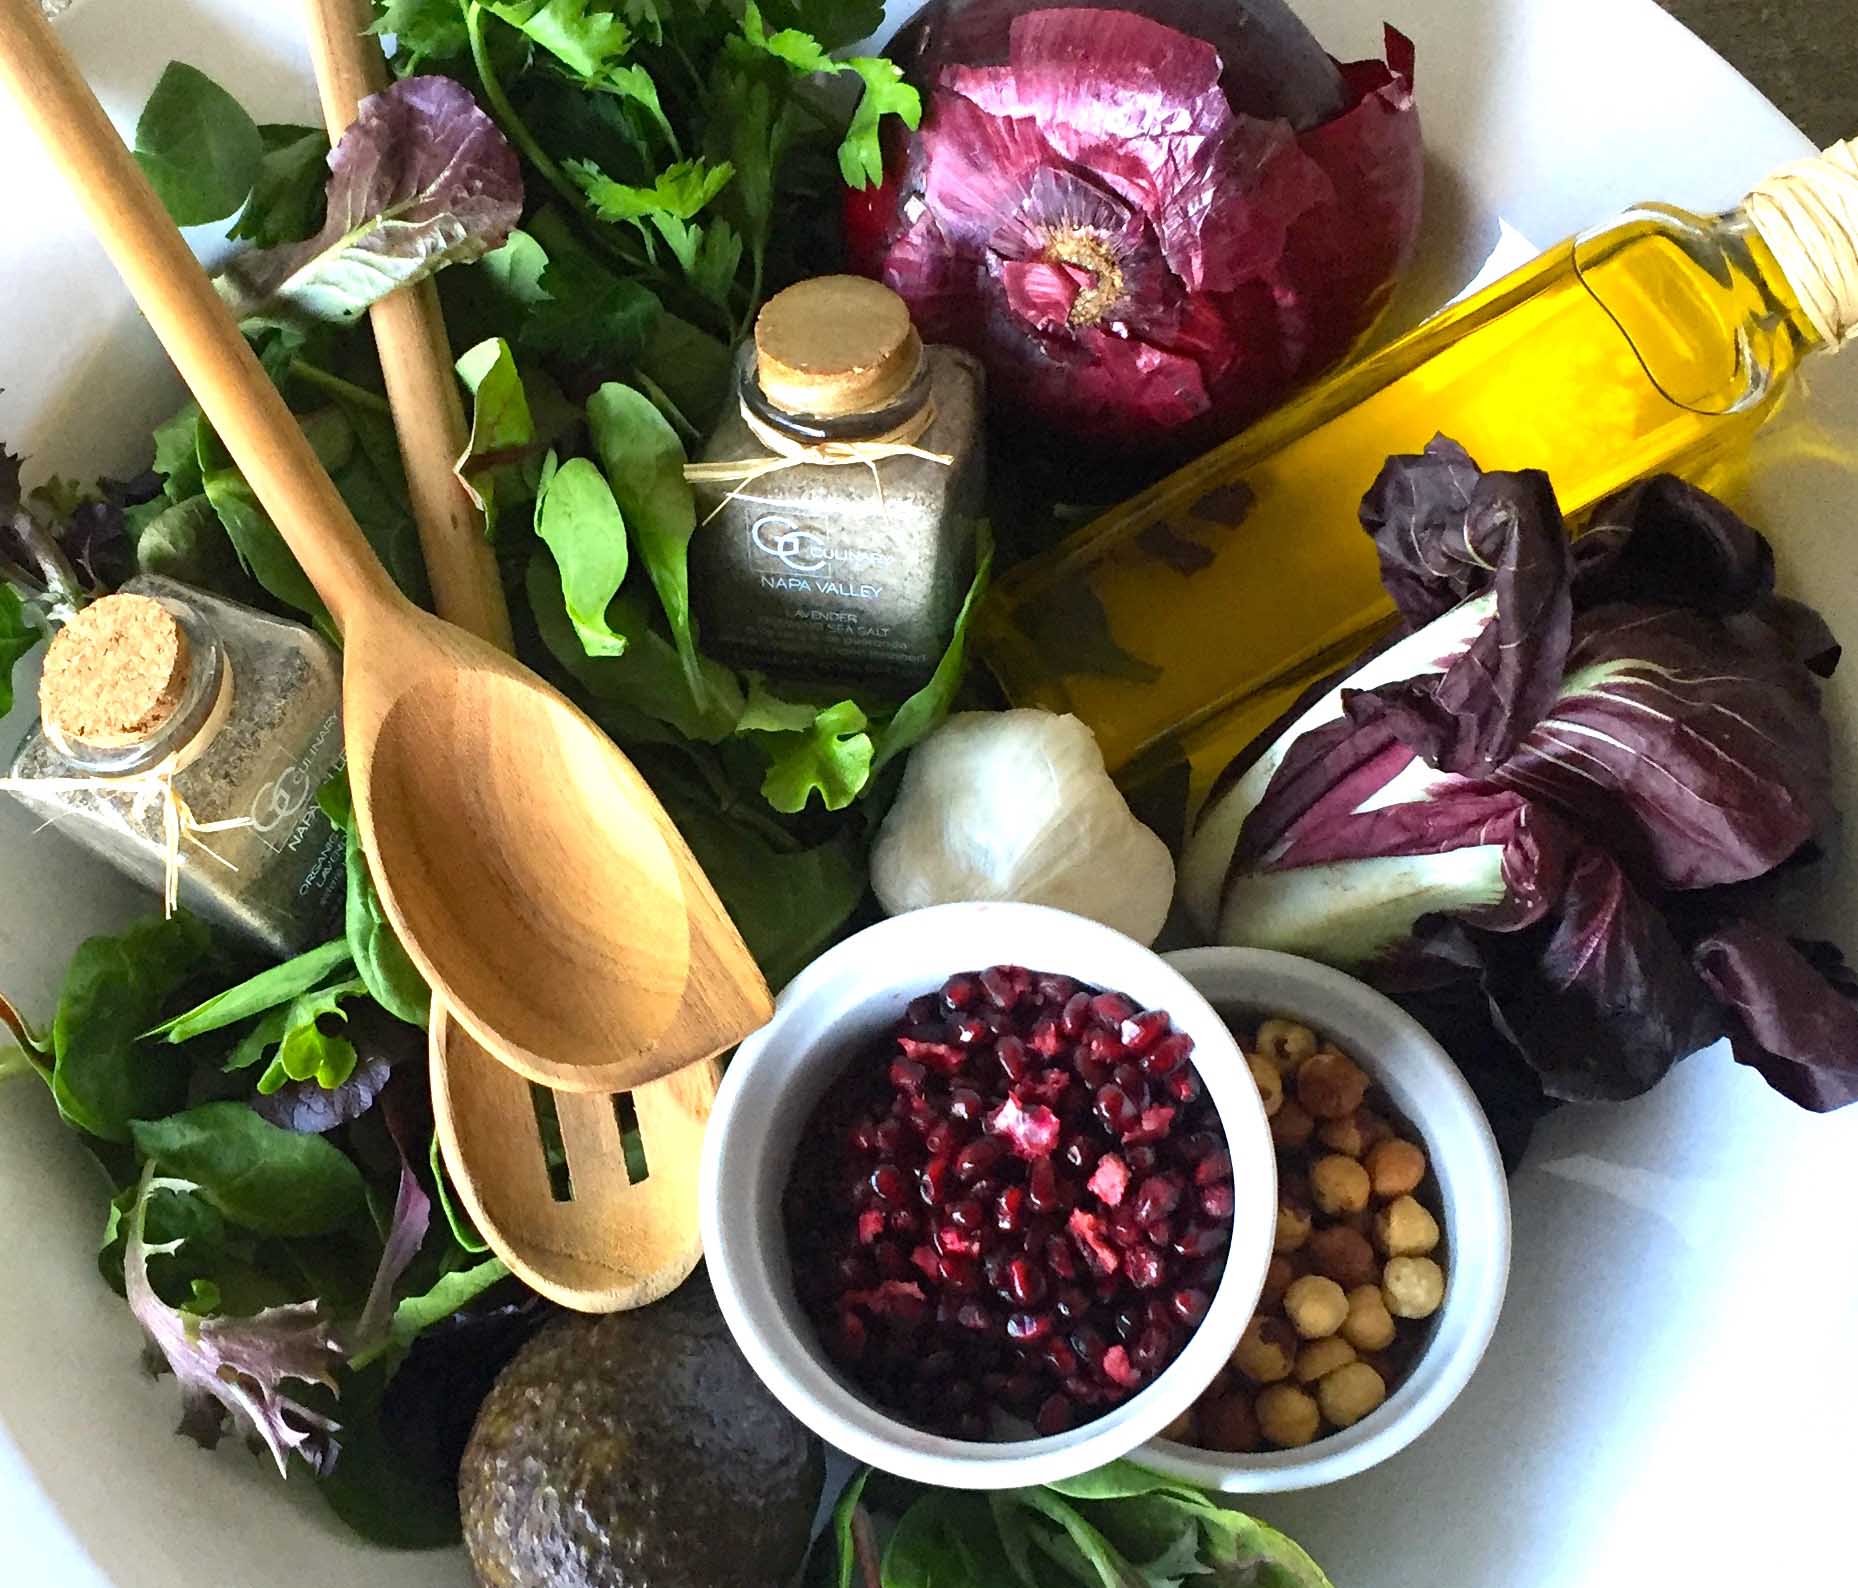 Composed Mixed Greens Salad with Estate Meyer Lemon Vinaigrette